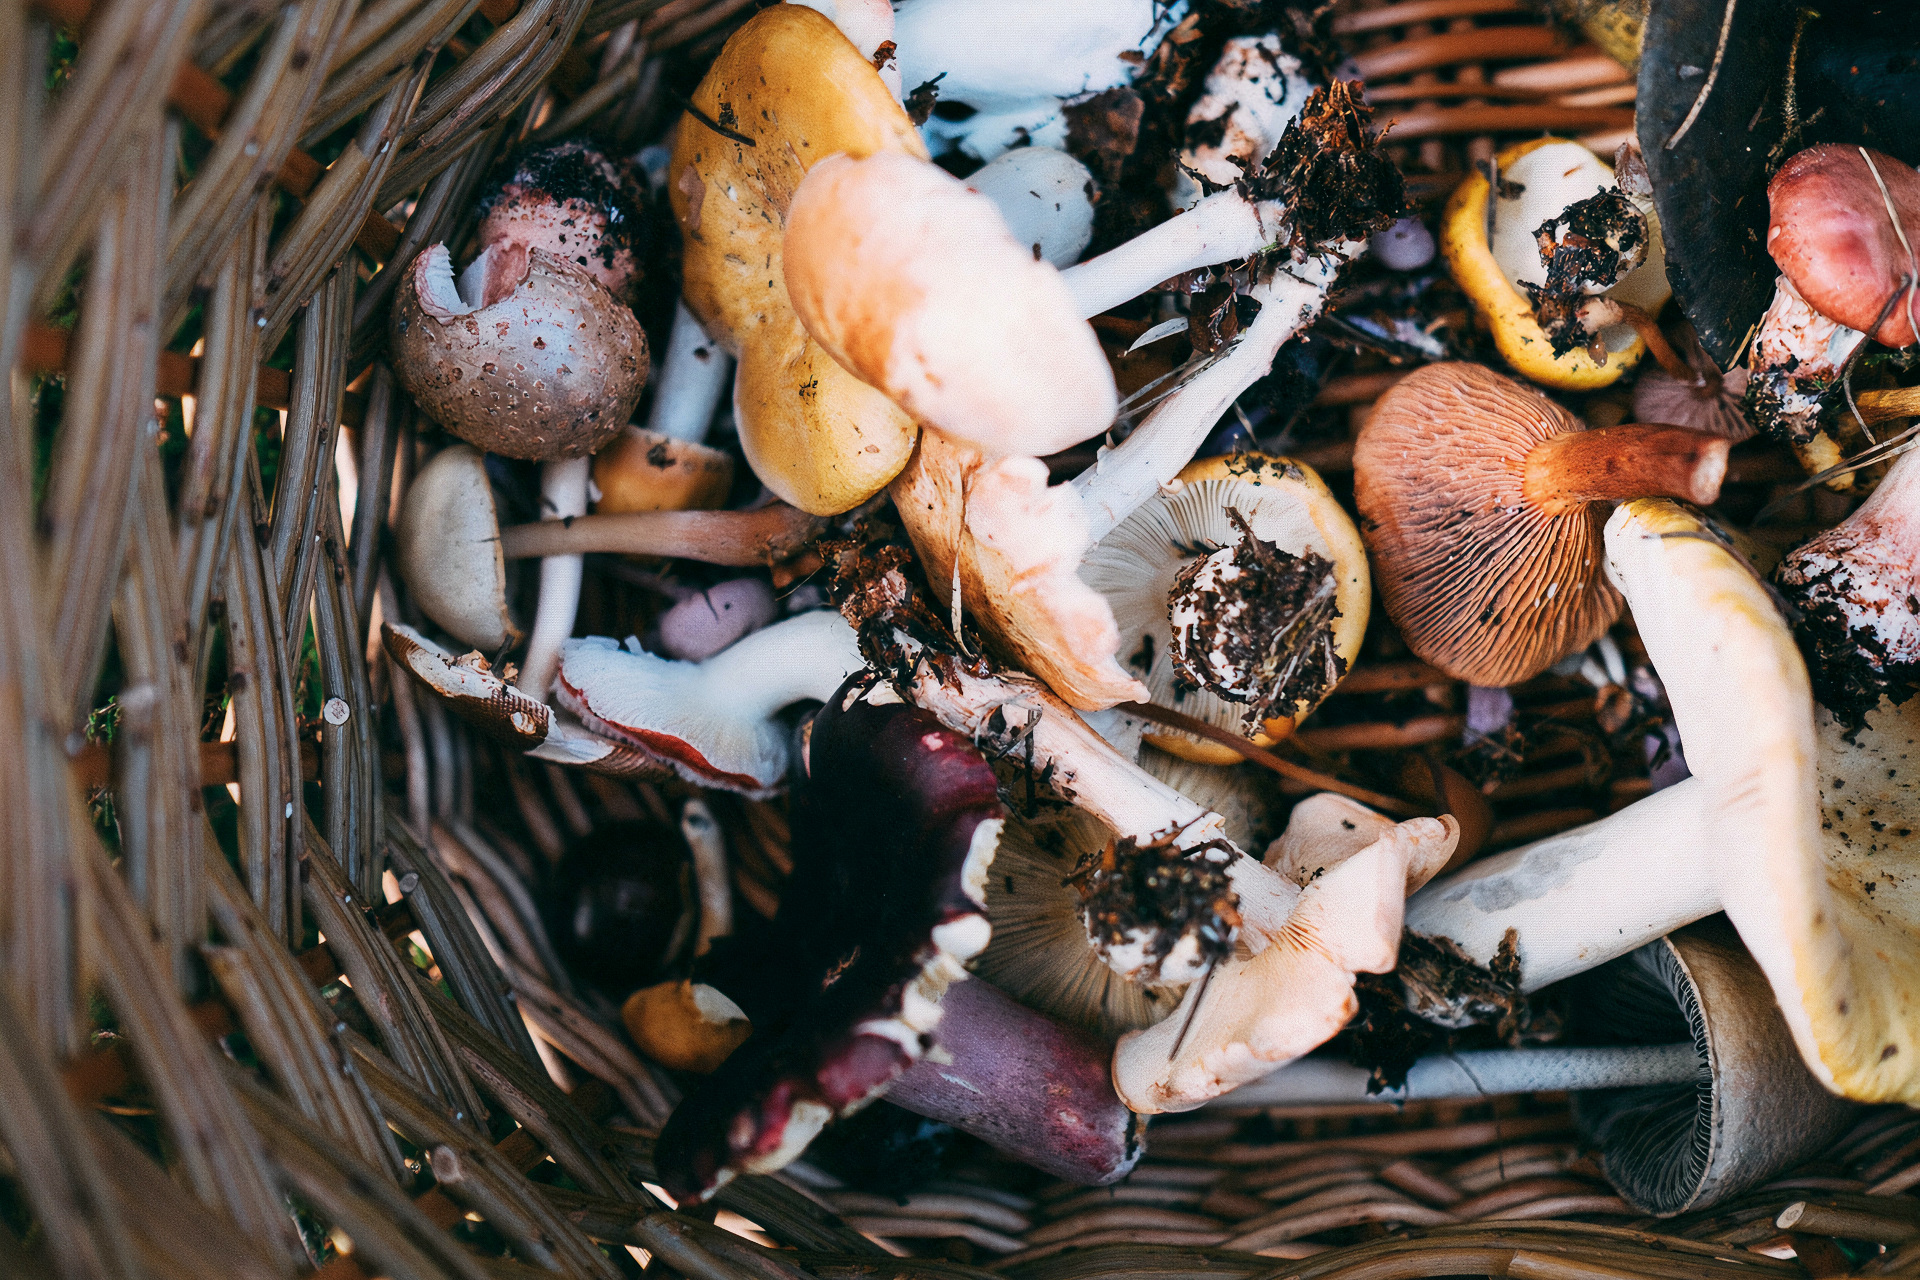 Foraged mushrooms in basket